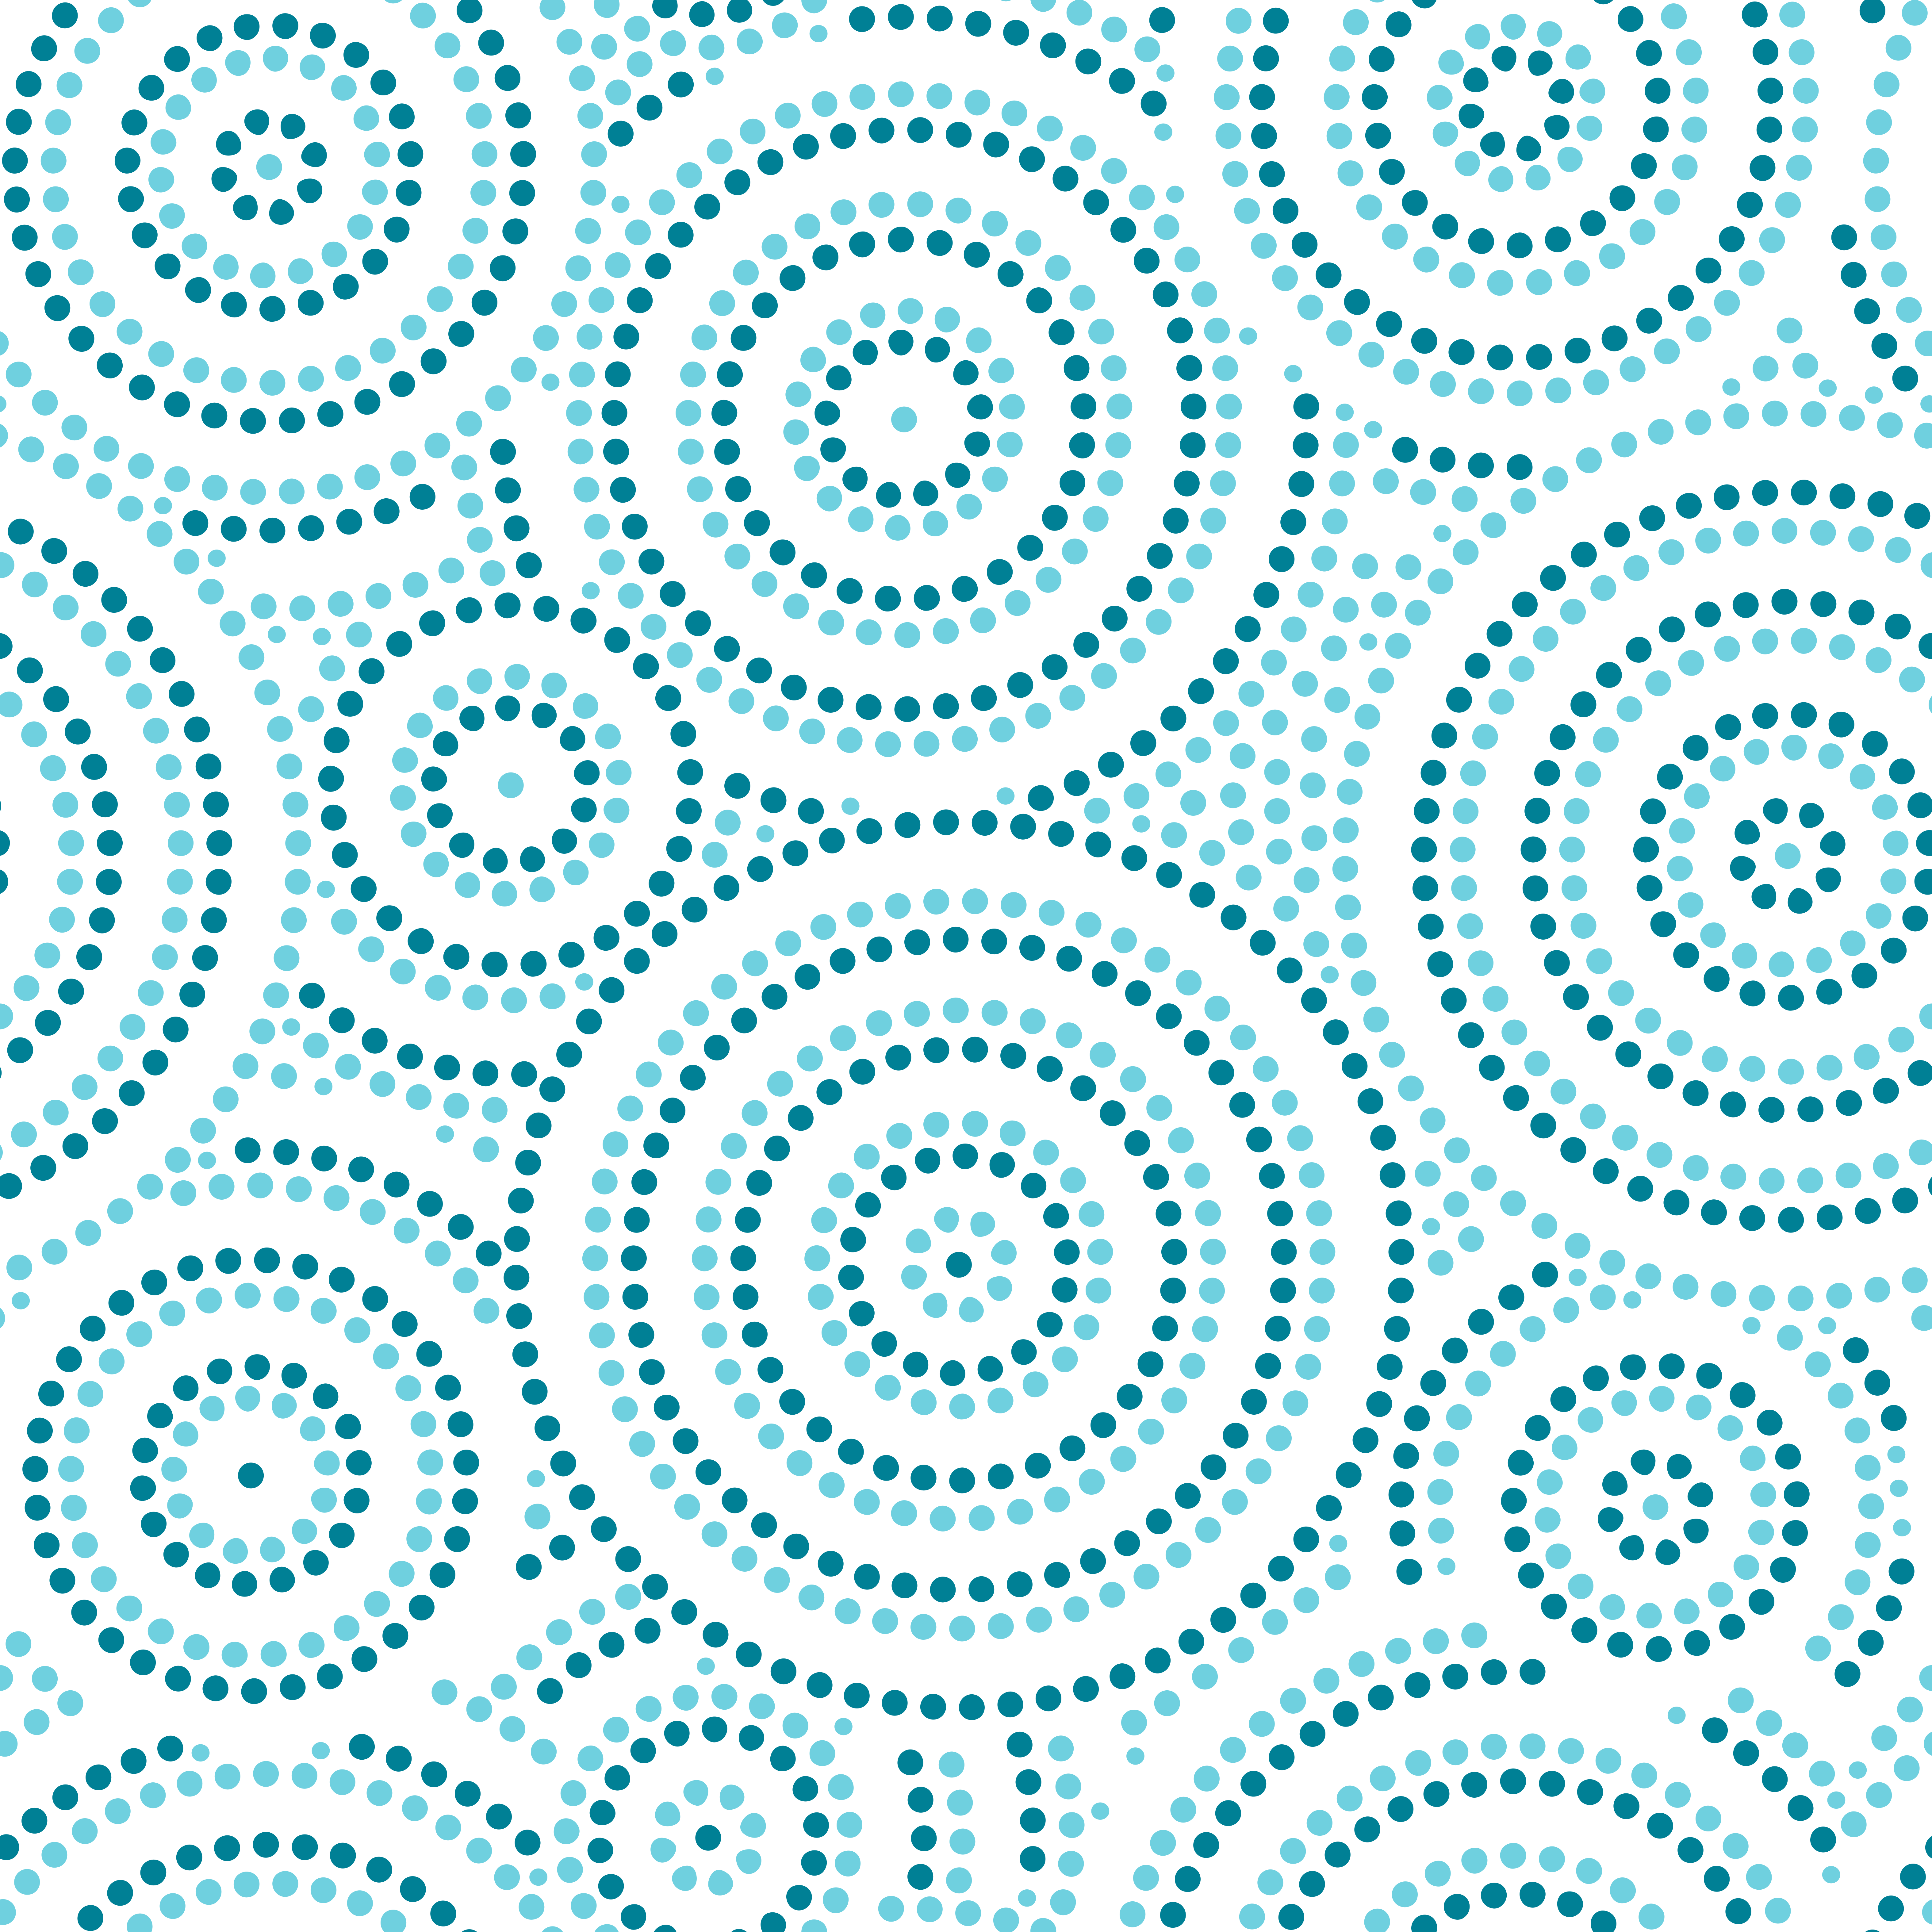 Blue and white australian aboriginal geometric art